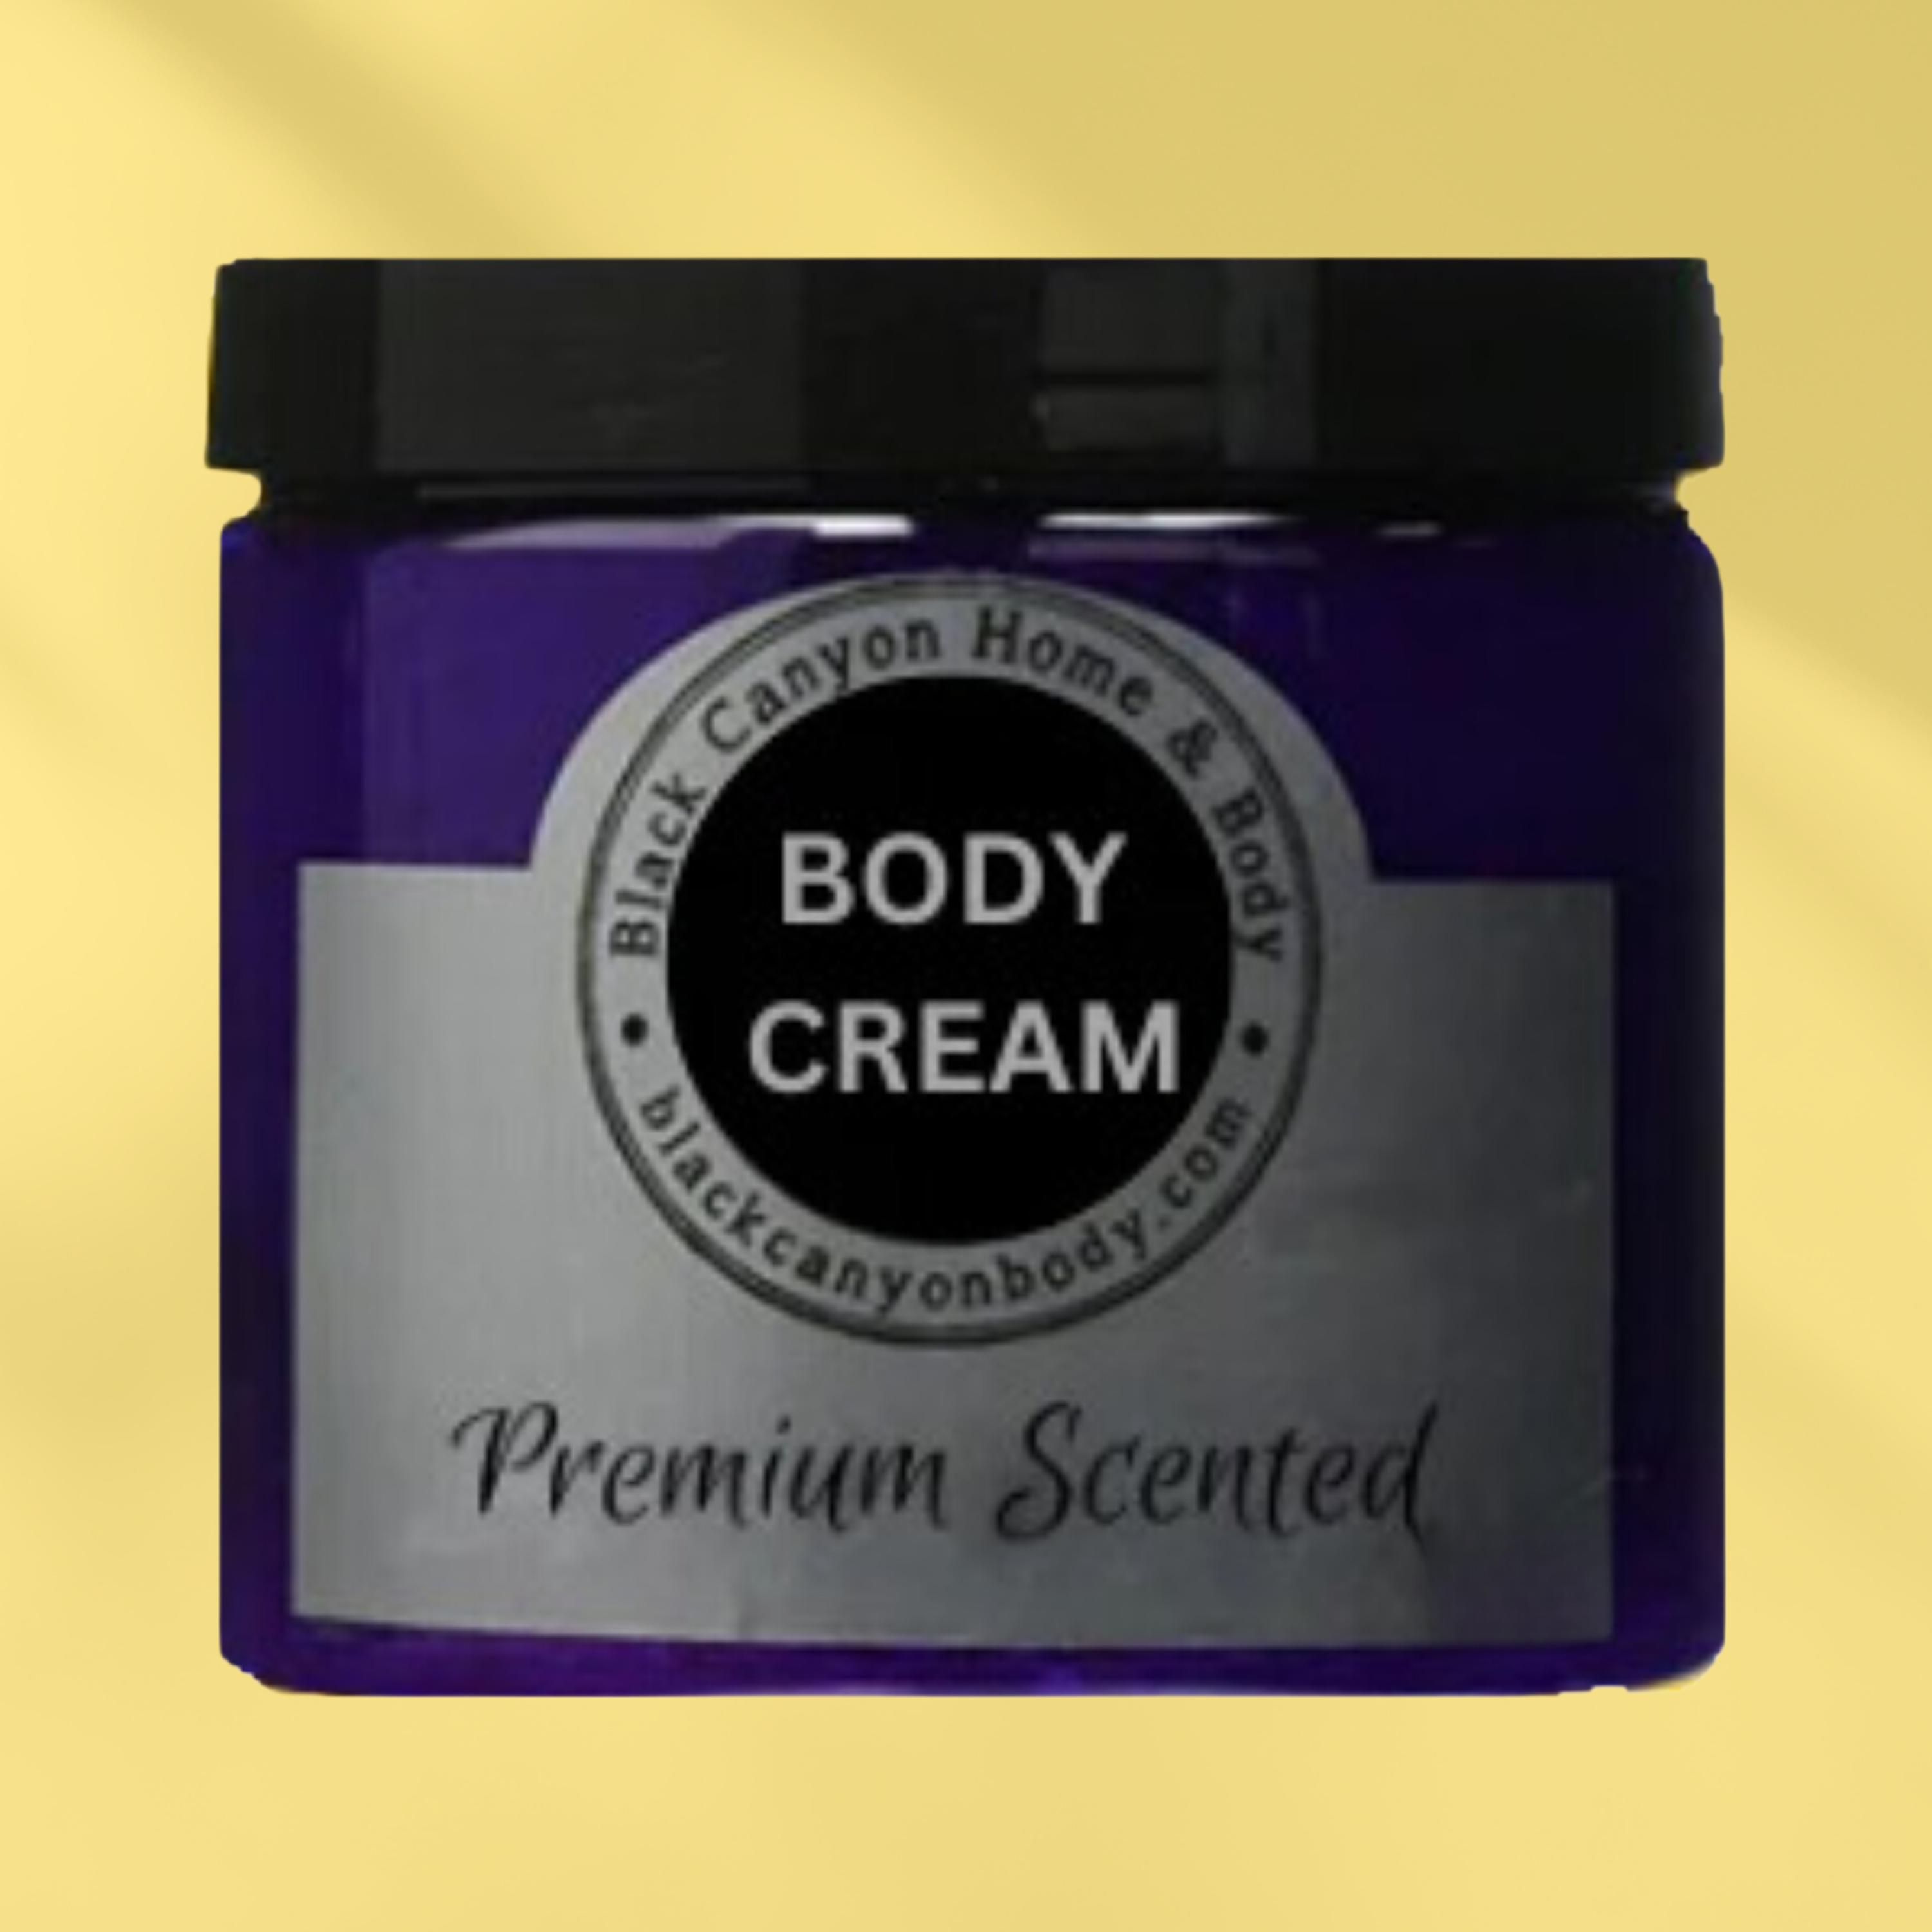 Black Canyon Bergamot & White Tea Scented Luxury Body Cream with Aloe